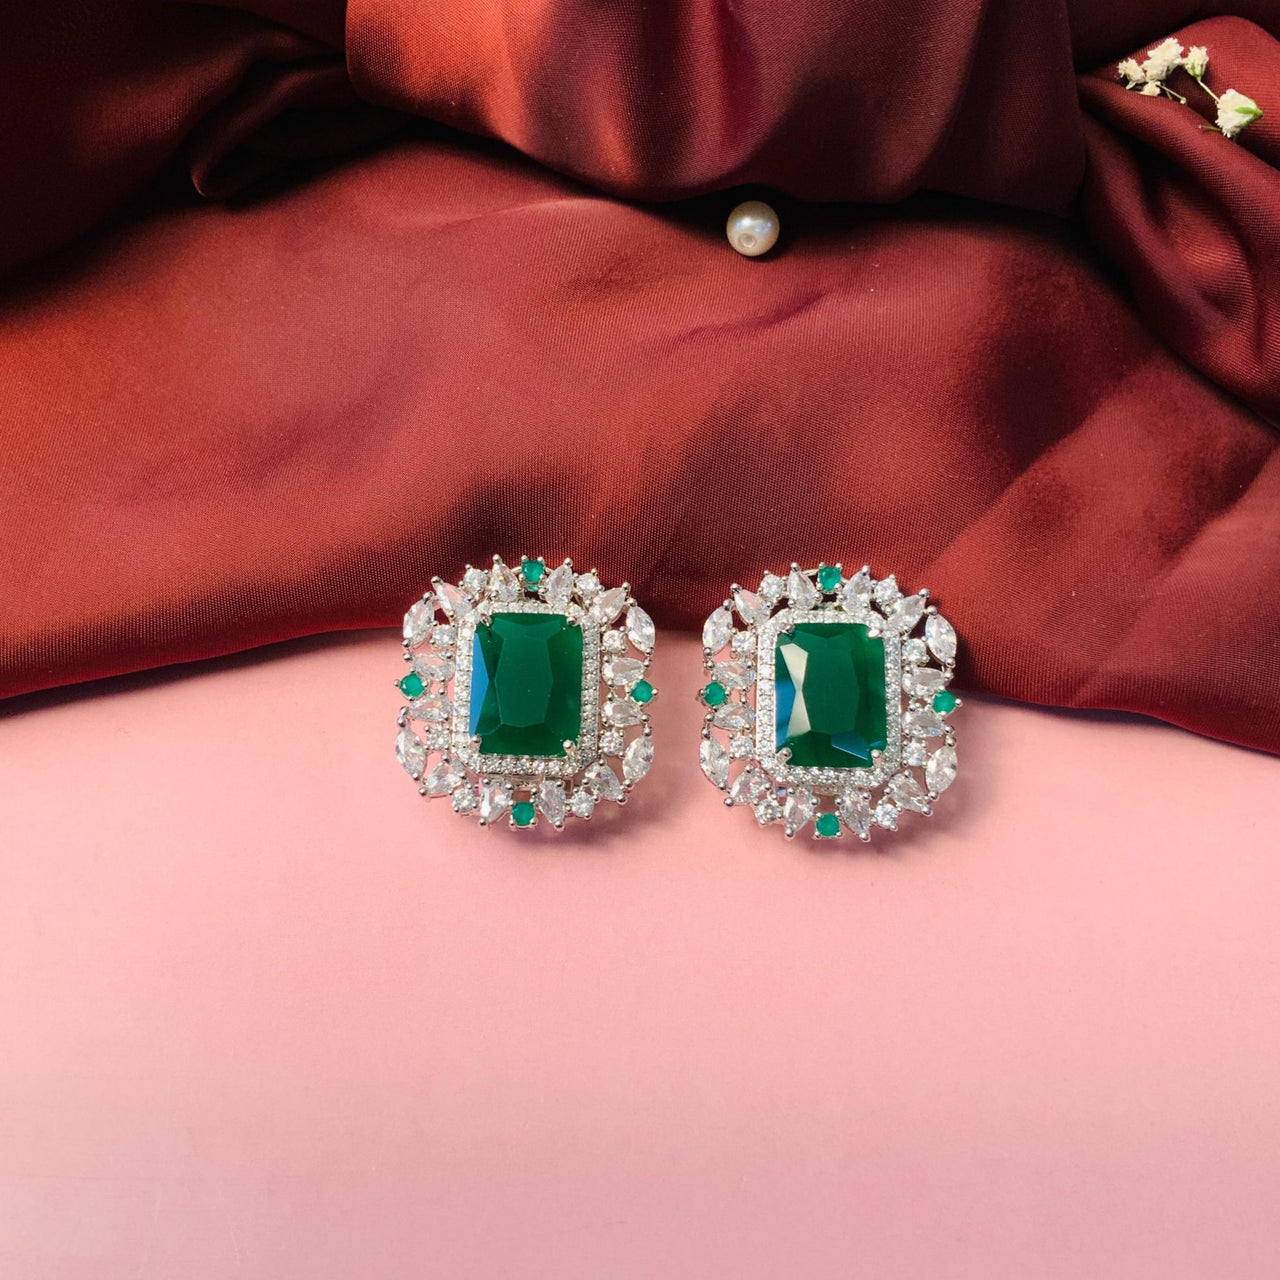 Kiara Advani Wedding Inspired Emerald Silver Plated Earrings